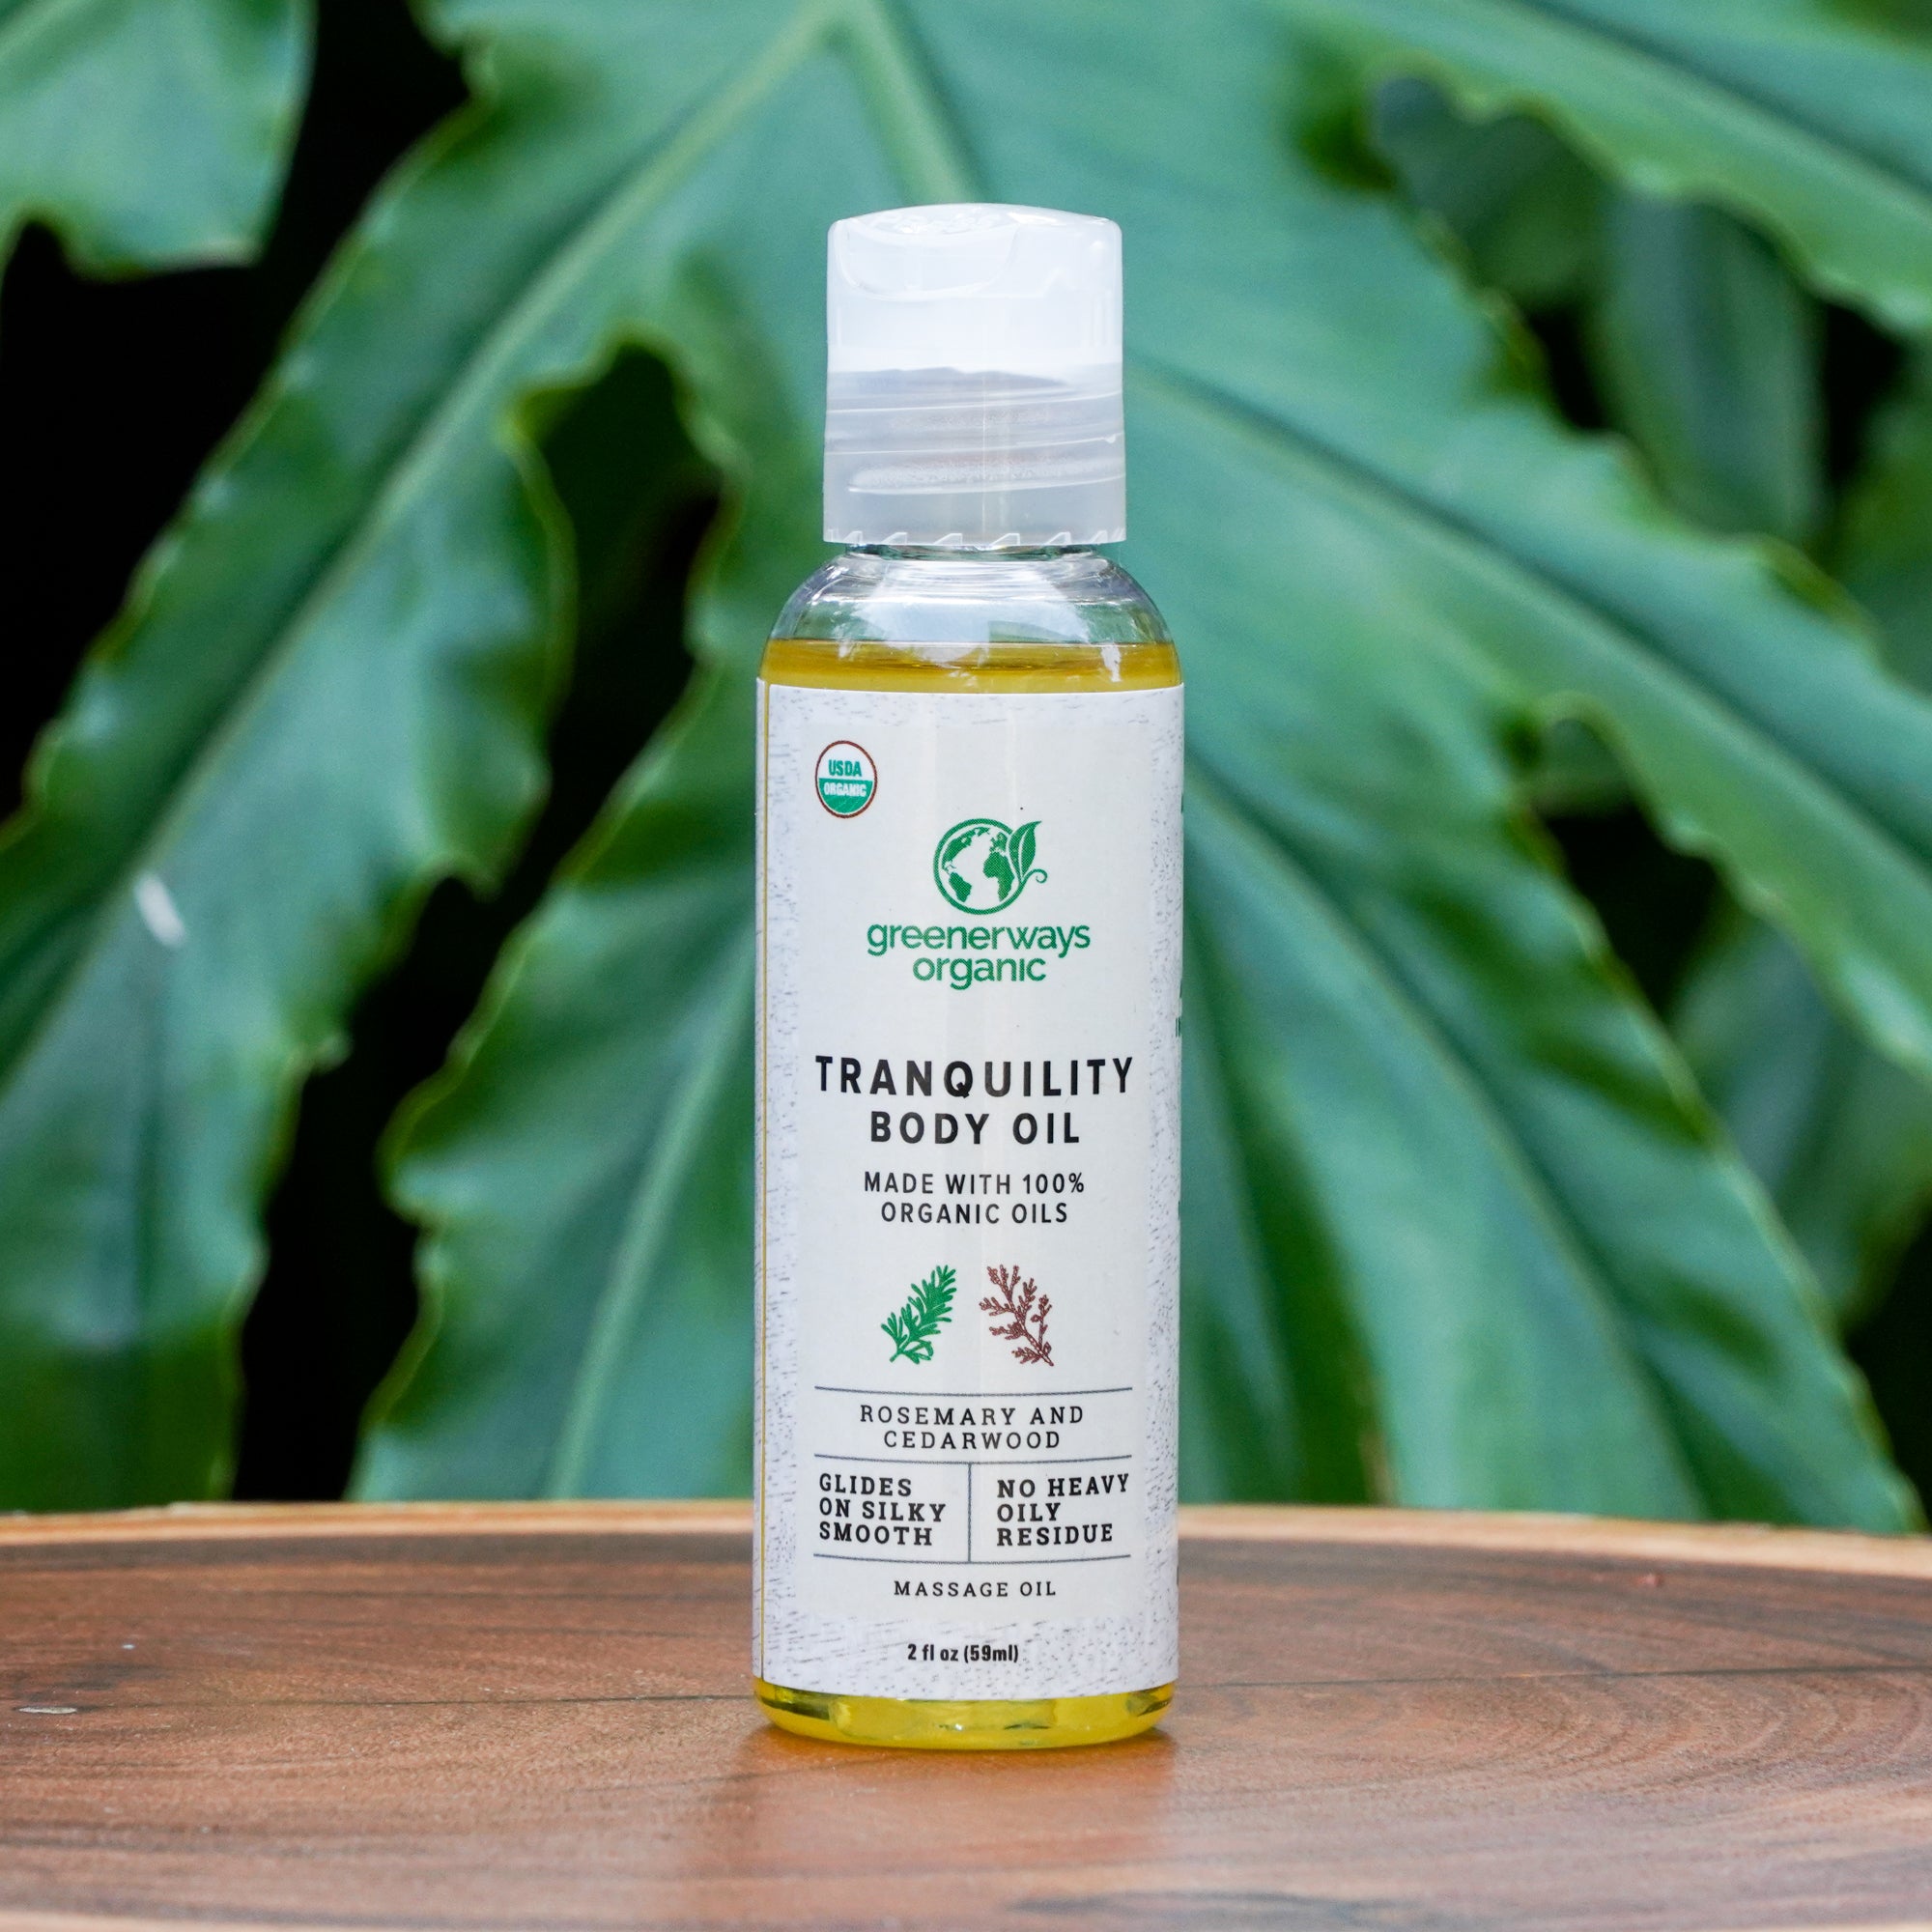 Greenerways Organic Relaxation Body Oil 3 Pack (2oz)